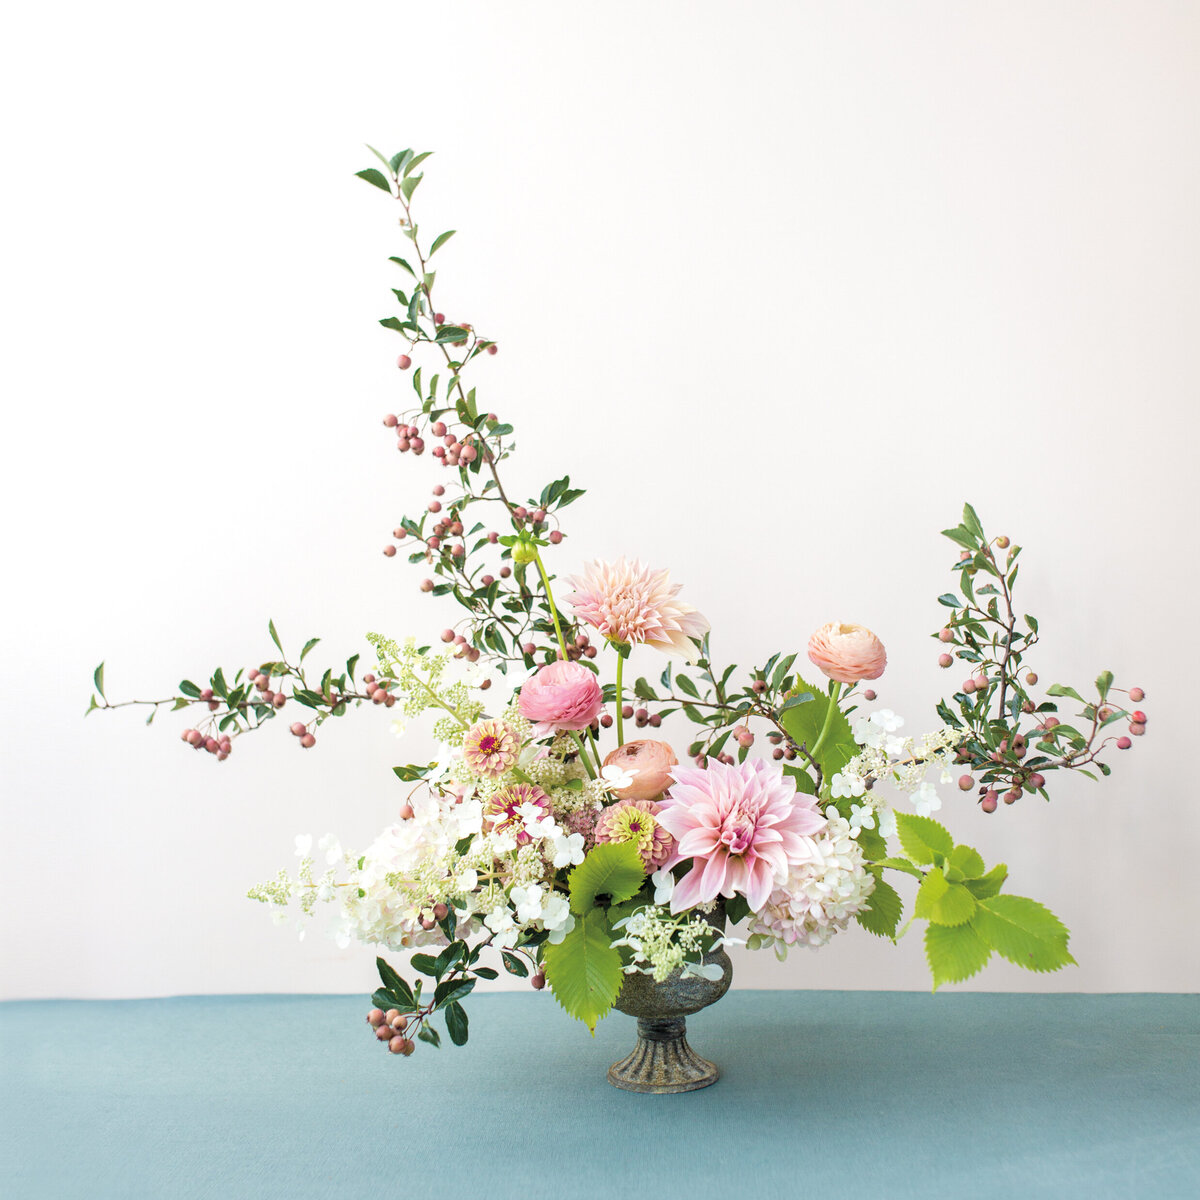 Atelier-Carmel-Wedding-Florist-GALLERY-Arrangements-12